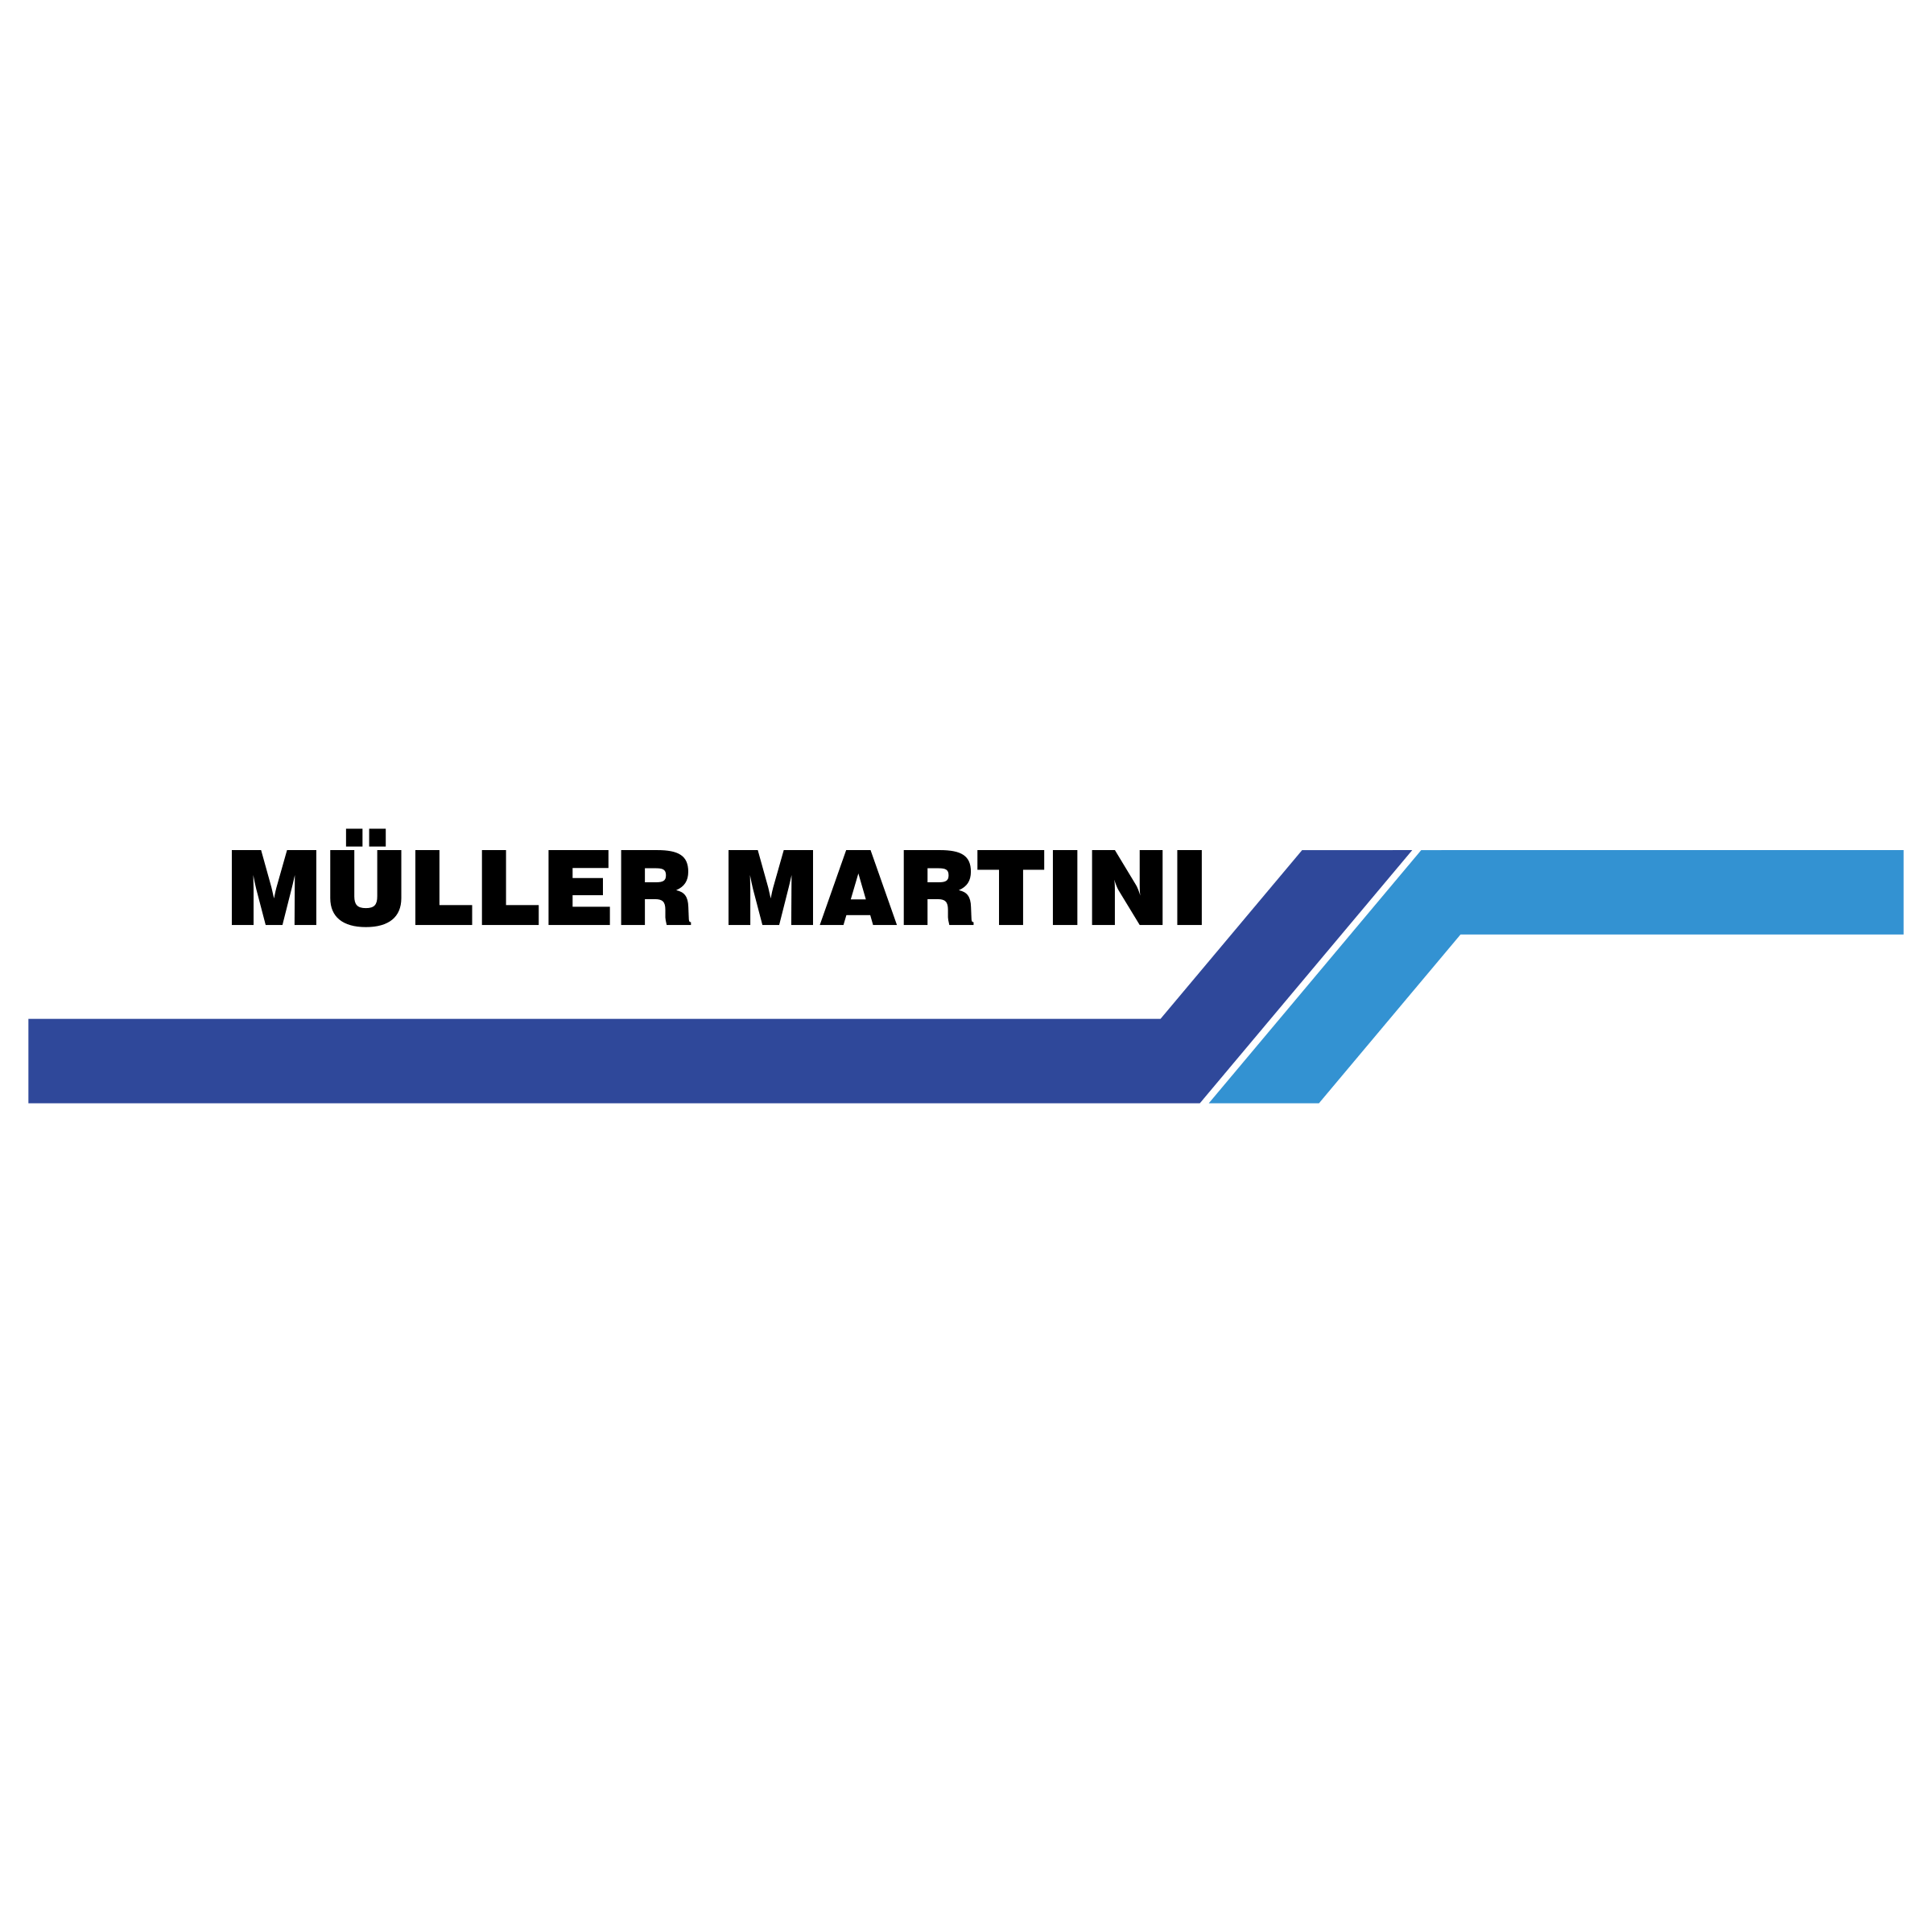 Martini Logo - Muller Martini Logo PNG Transparent & SVG Vector